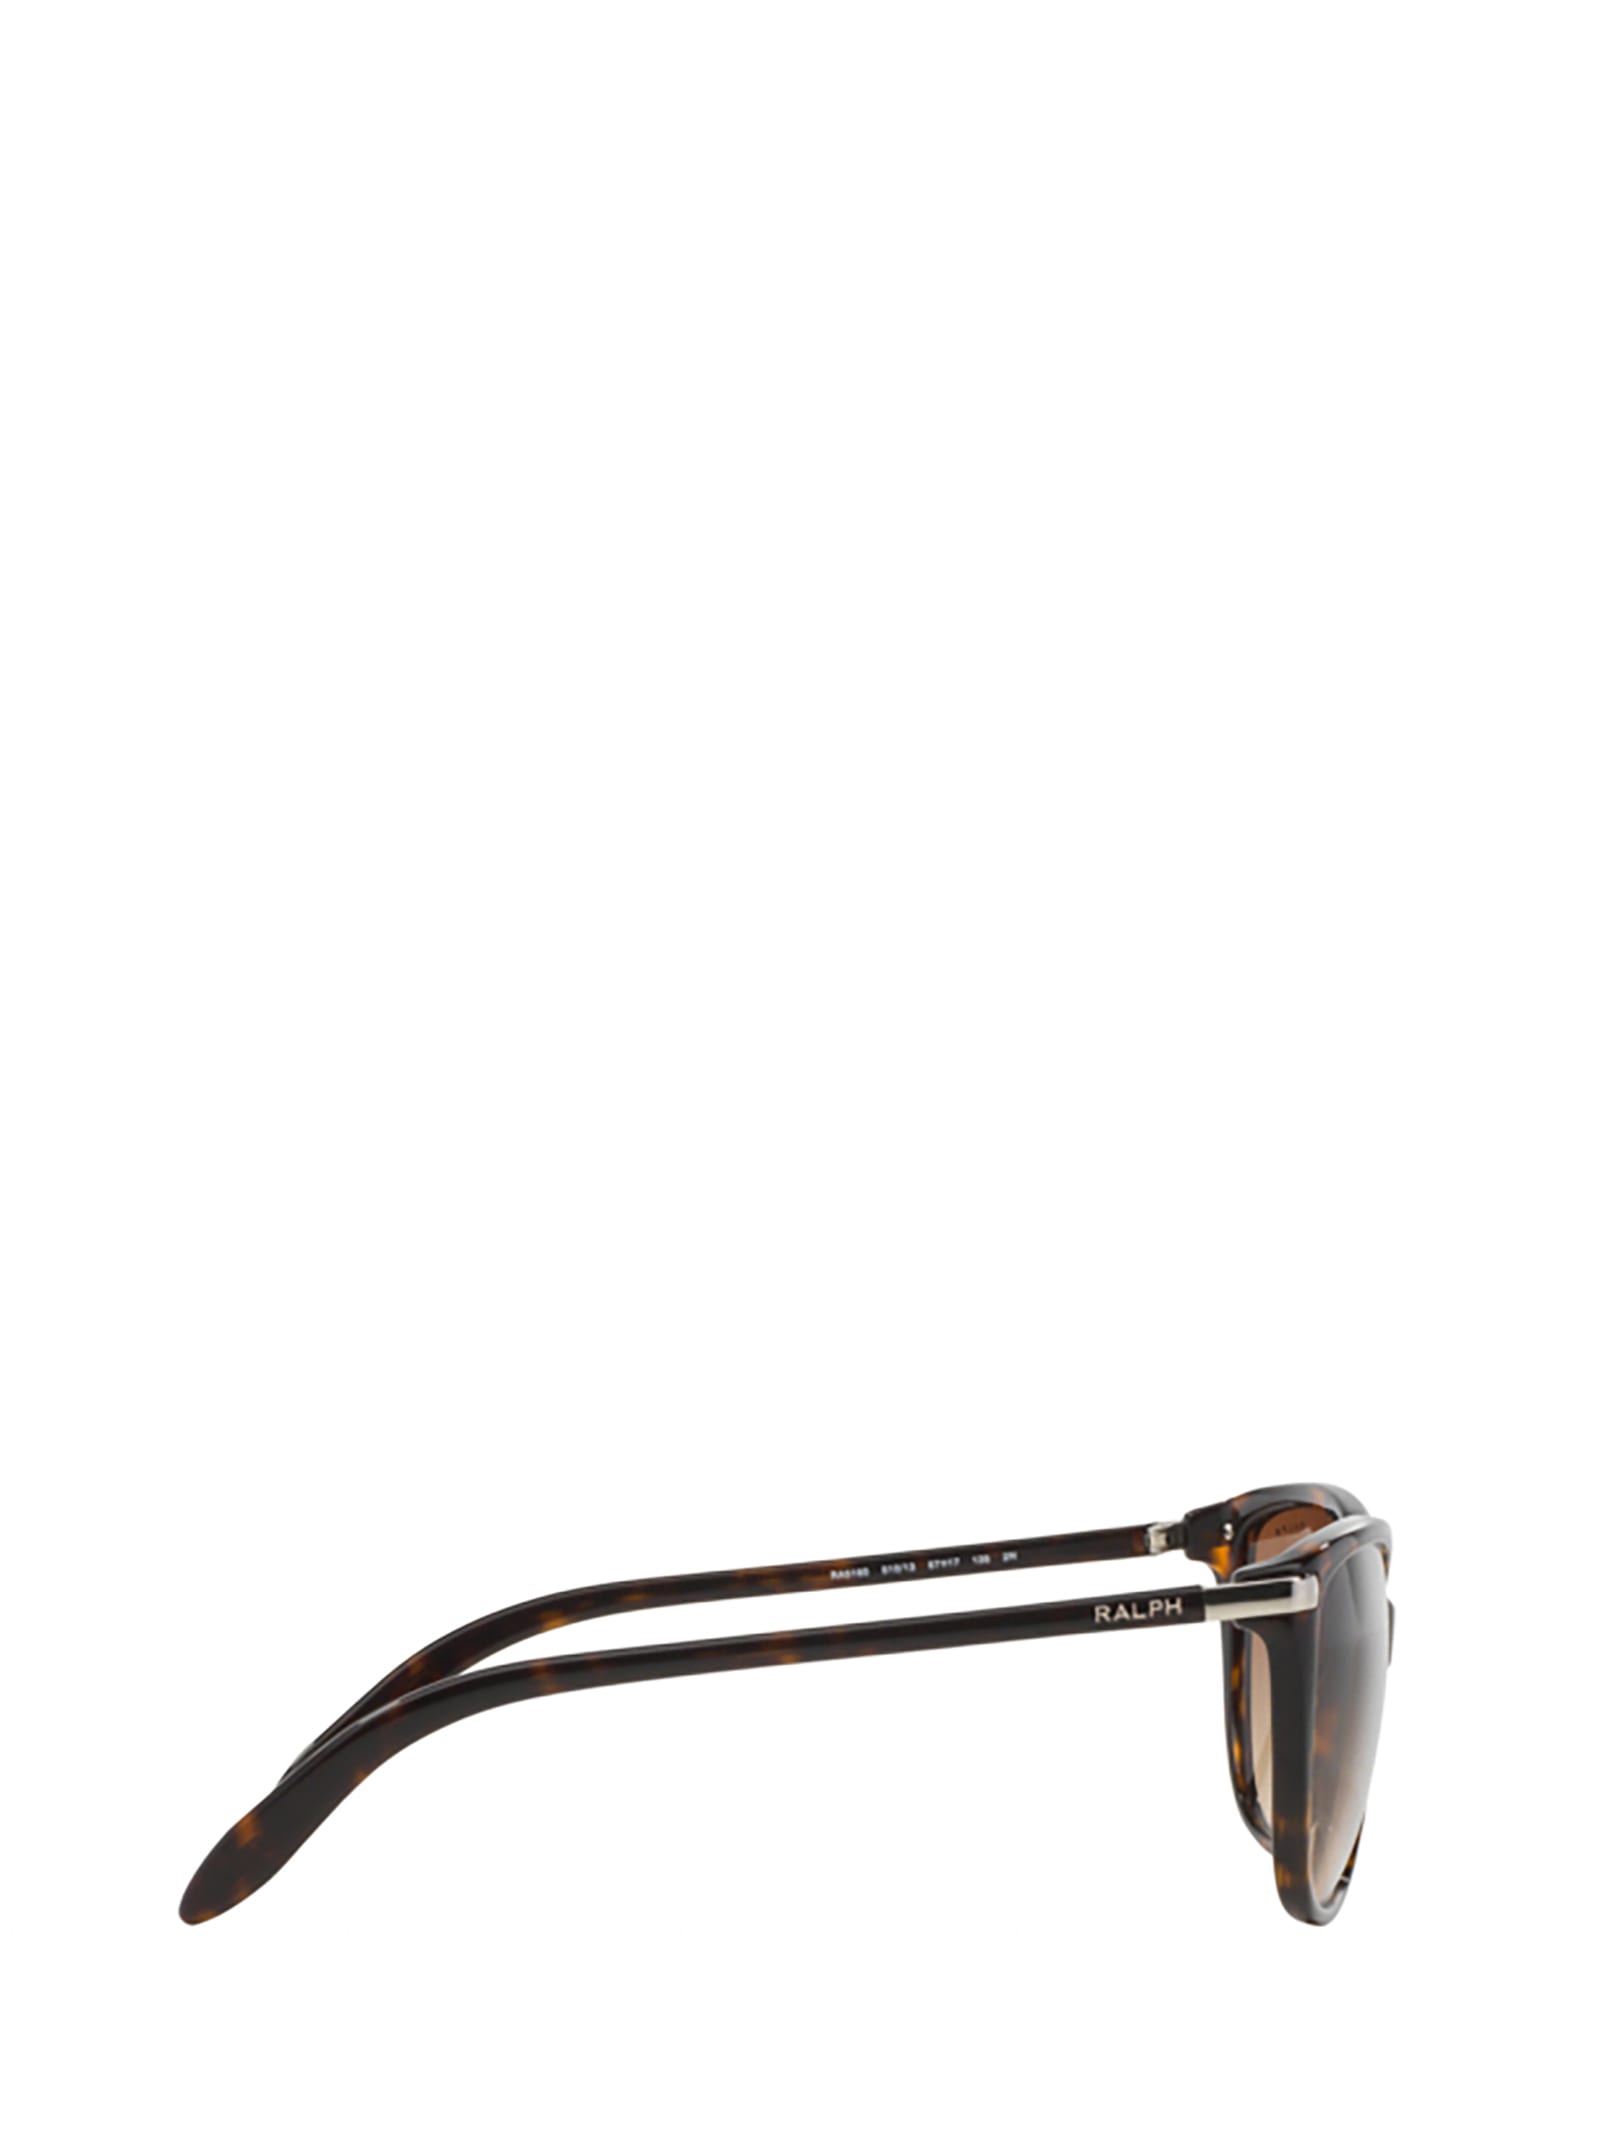 Shop Polo Ralph Lauren Ra5160 Shiny Dark Tortoise Sunglasses